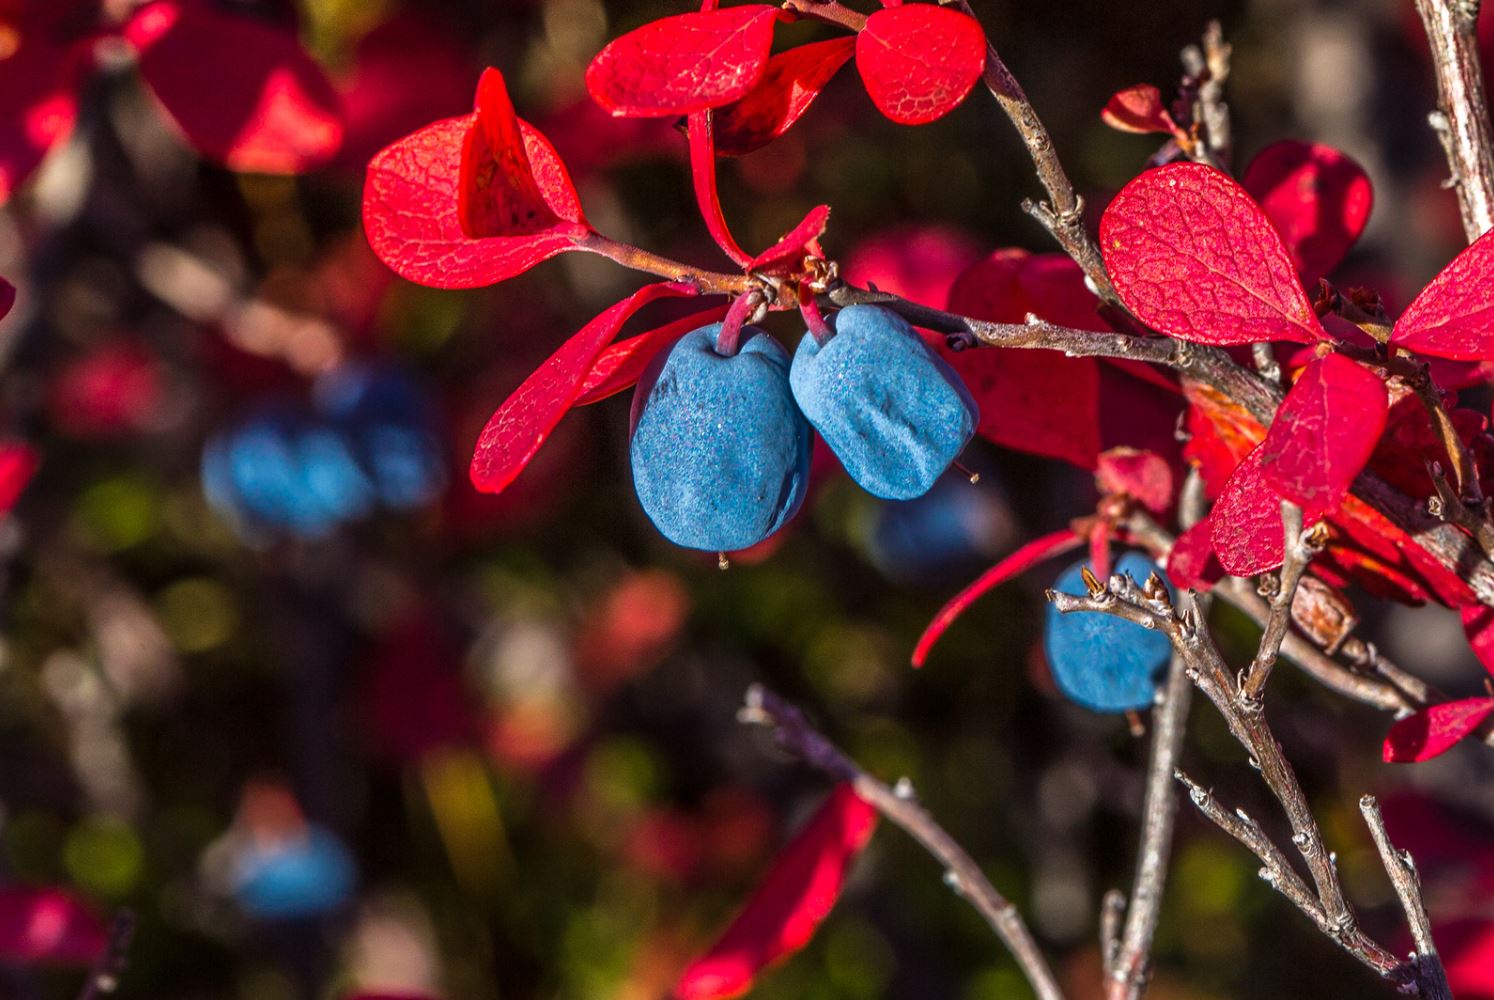 Alaska blueberries